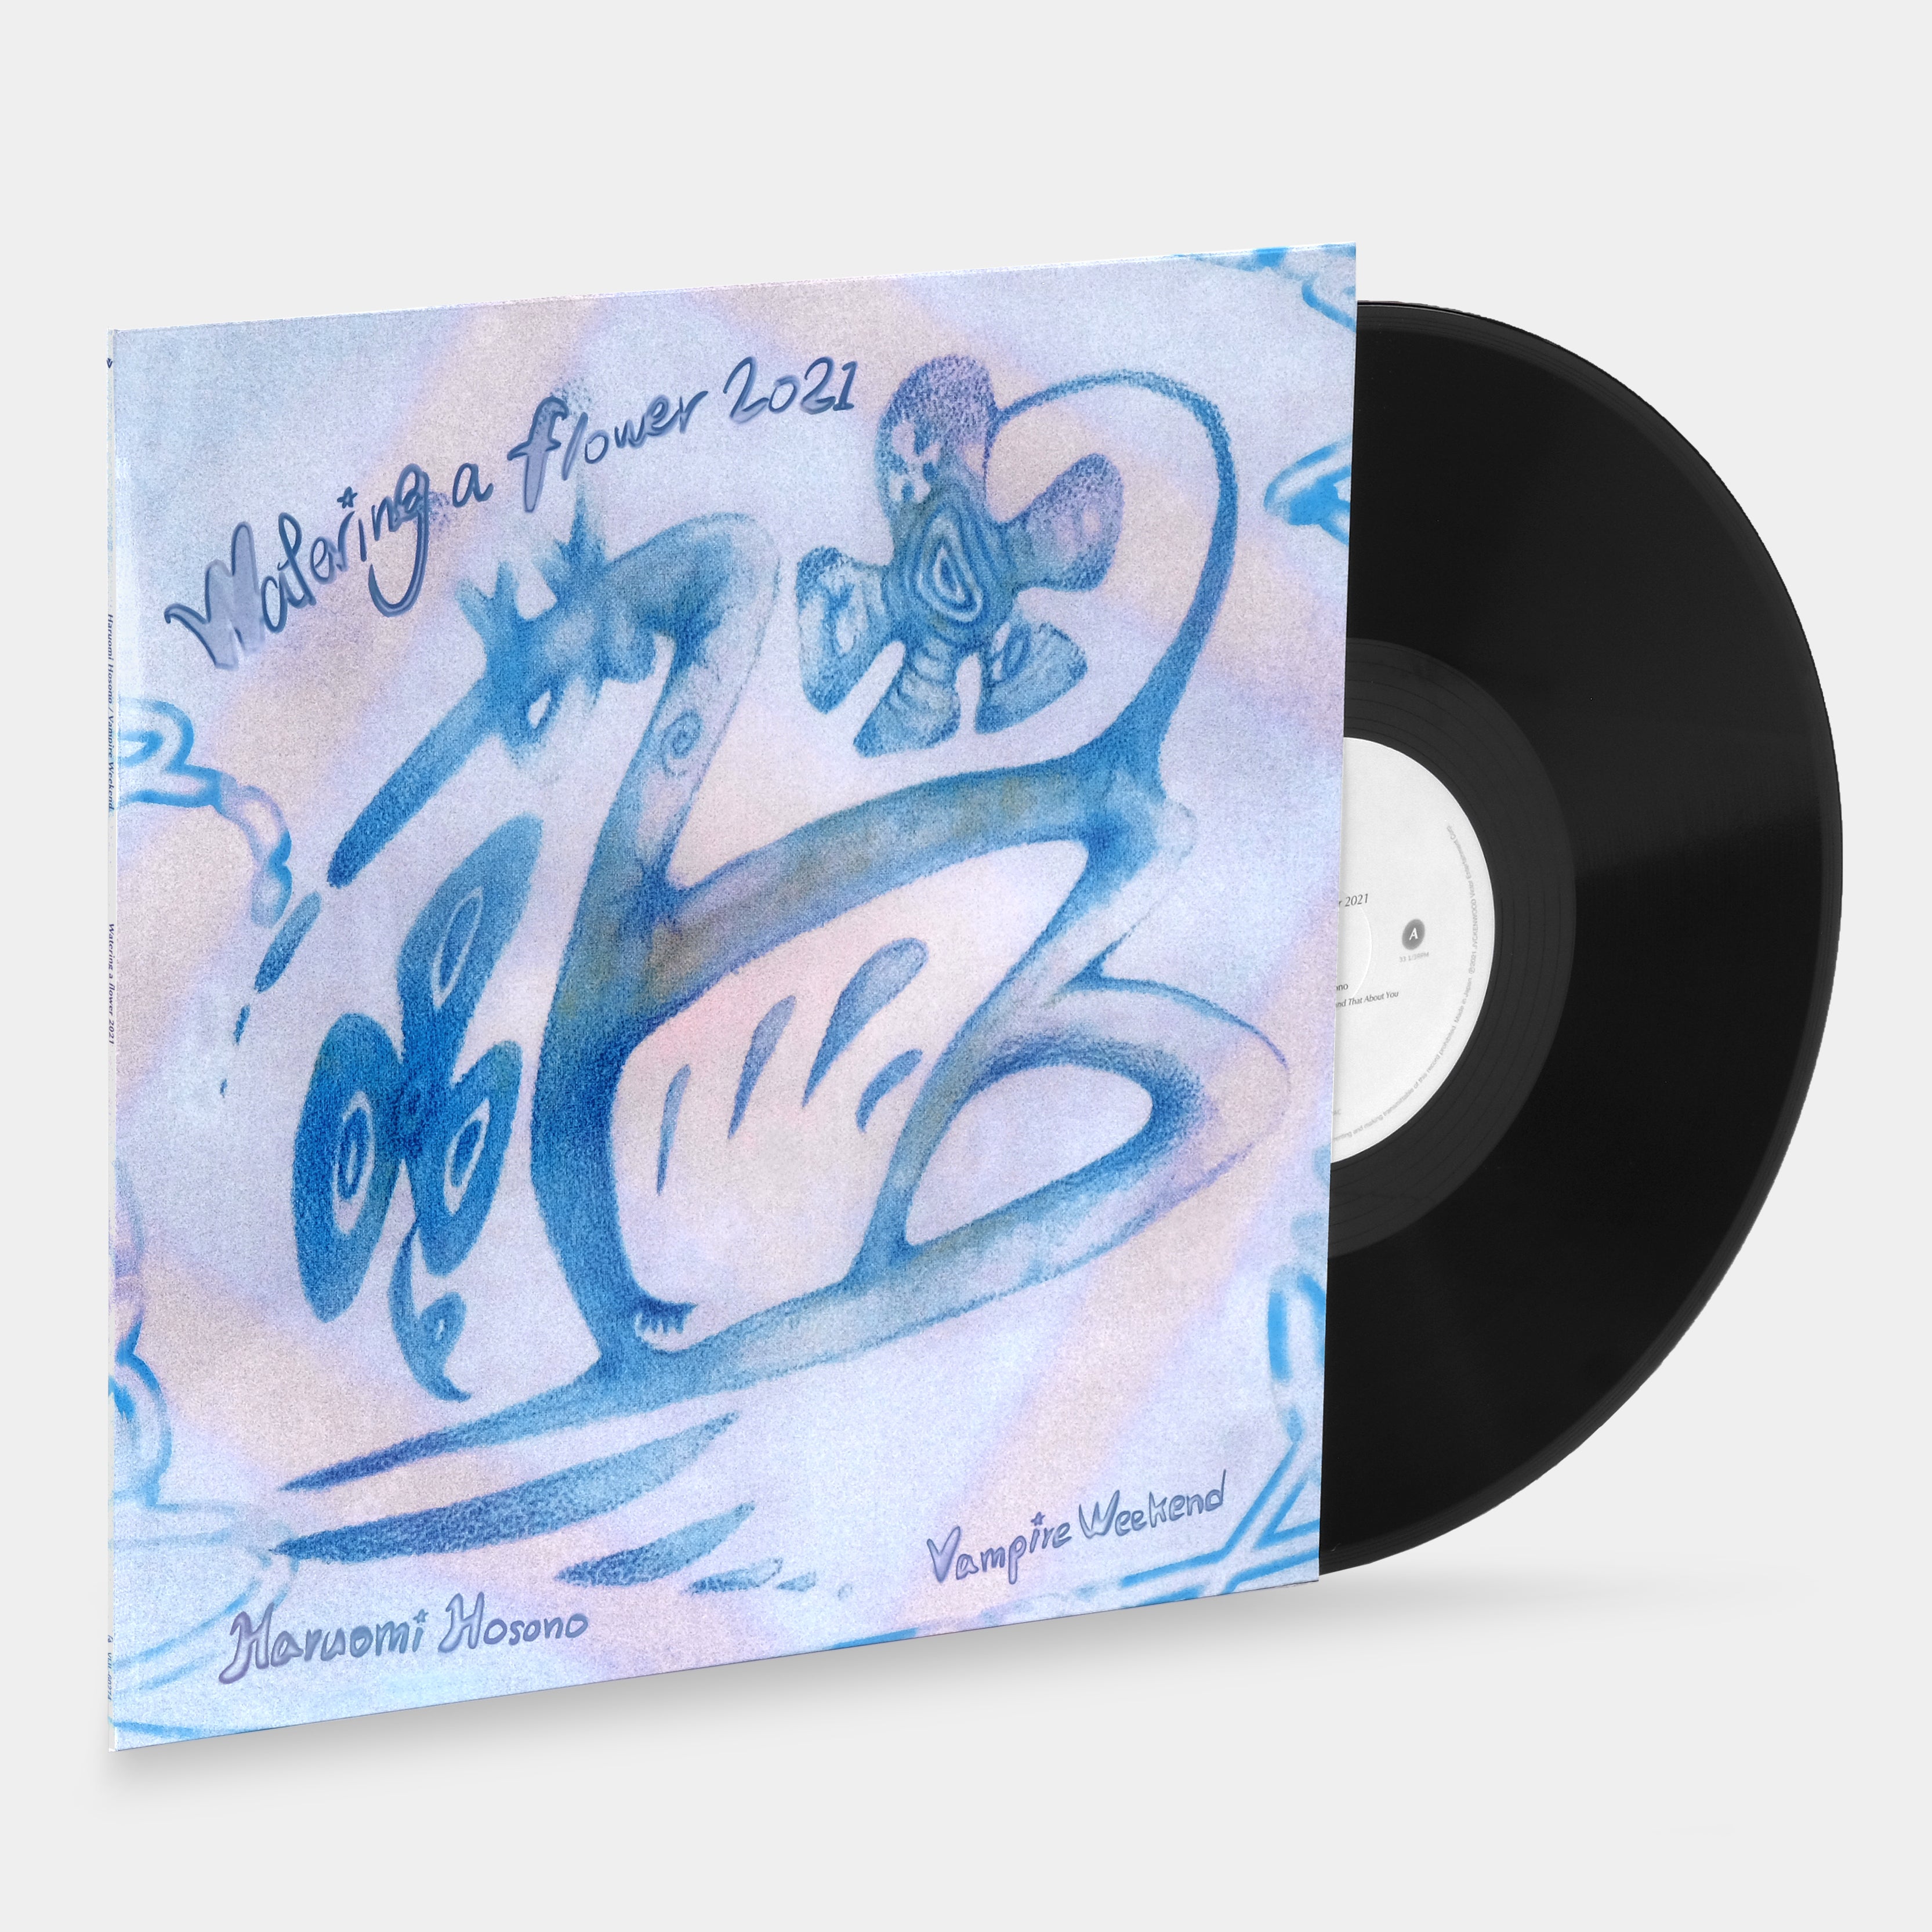 Haruomi Hosono & Vampire Weekend - Watering A Flower 2021 12" Single Vinyl Record